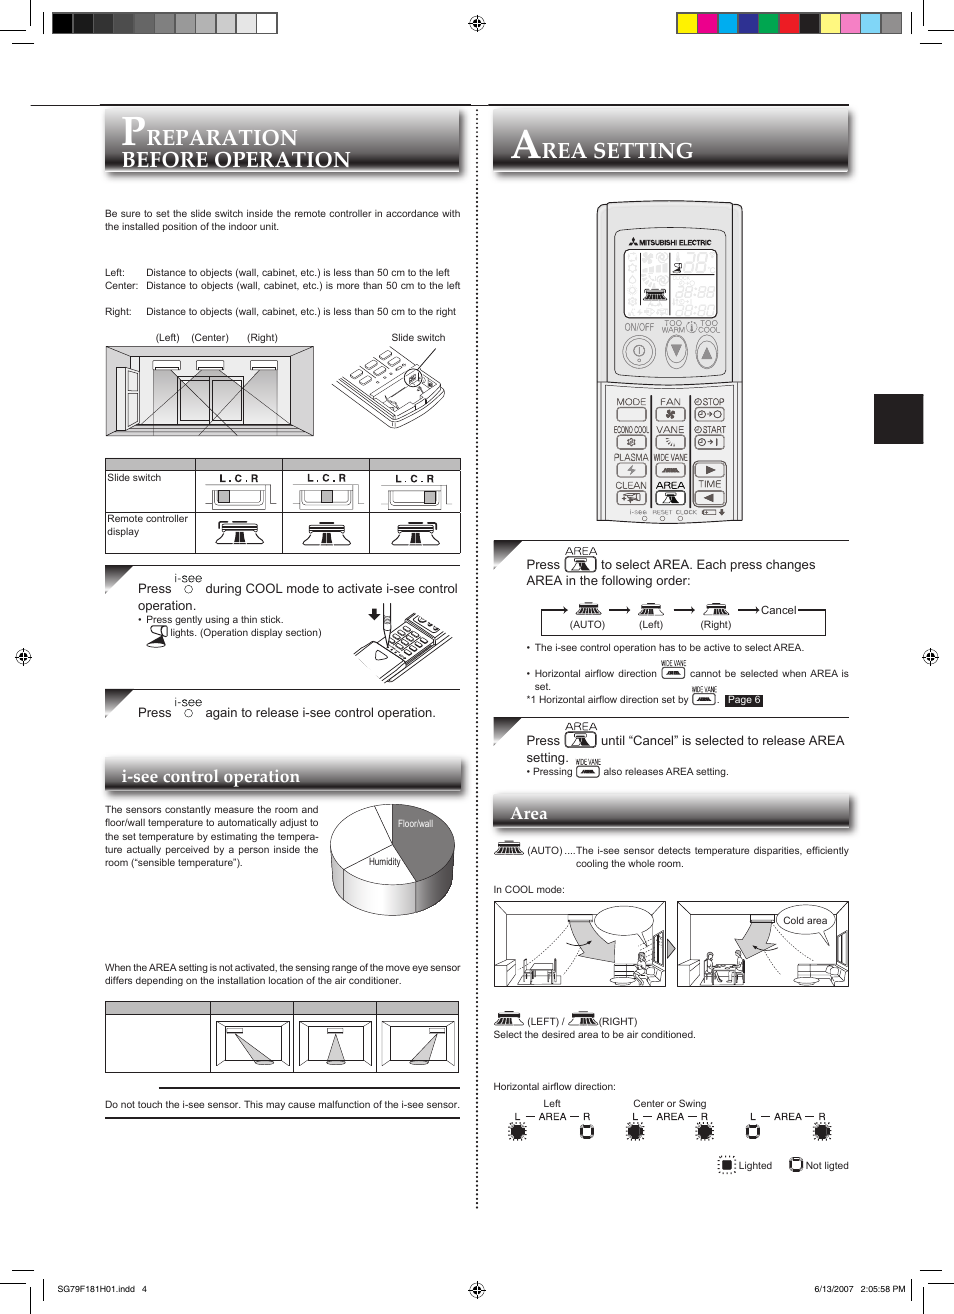 Reparation before operation, Rea setting, Indoor unit display | MITSUBISHI  ELECTRIC MSZ-FD25VA User Manual | Page 5 / 12 | Original mode